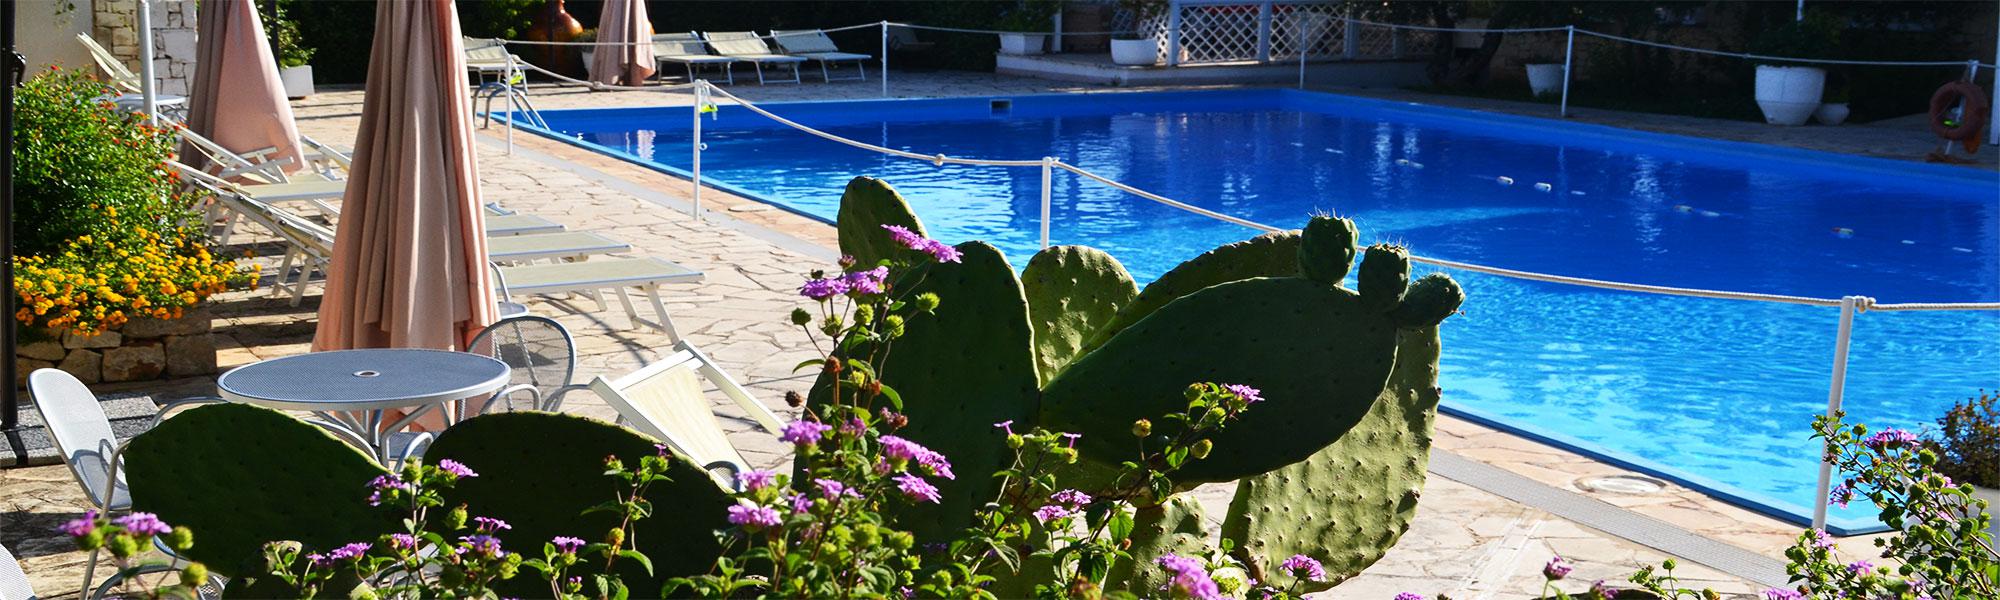 Hotel mit pool Apulien Salento - Agriturismo Salinola Ostuni 3